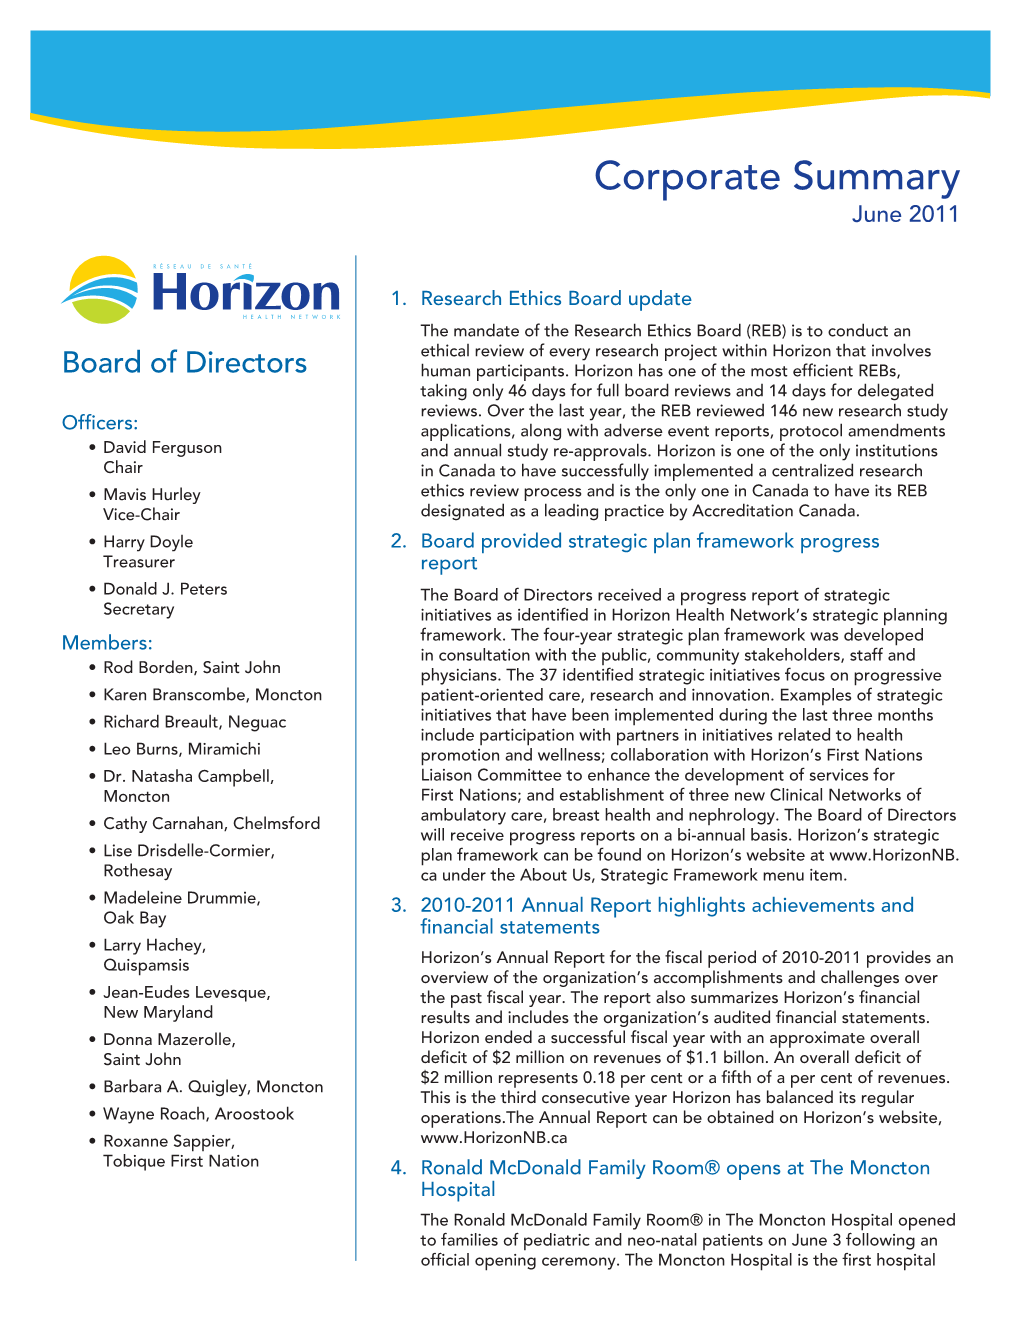 Corporate Summary June 2011